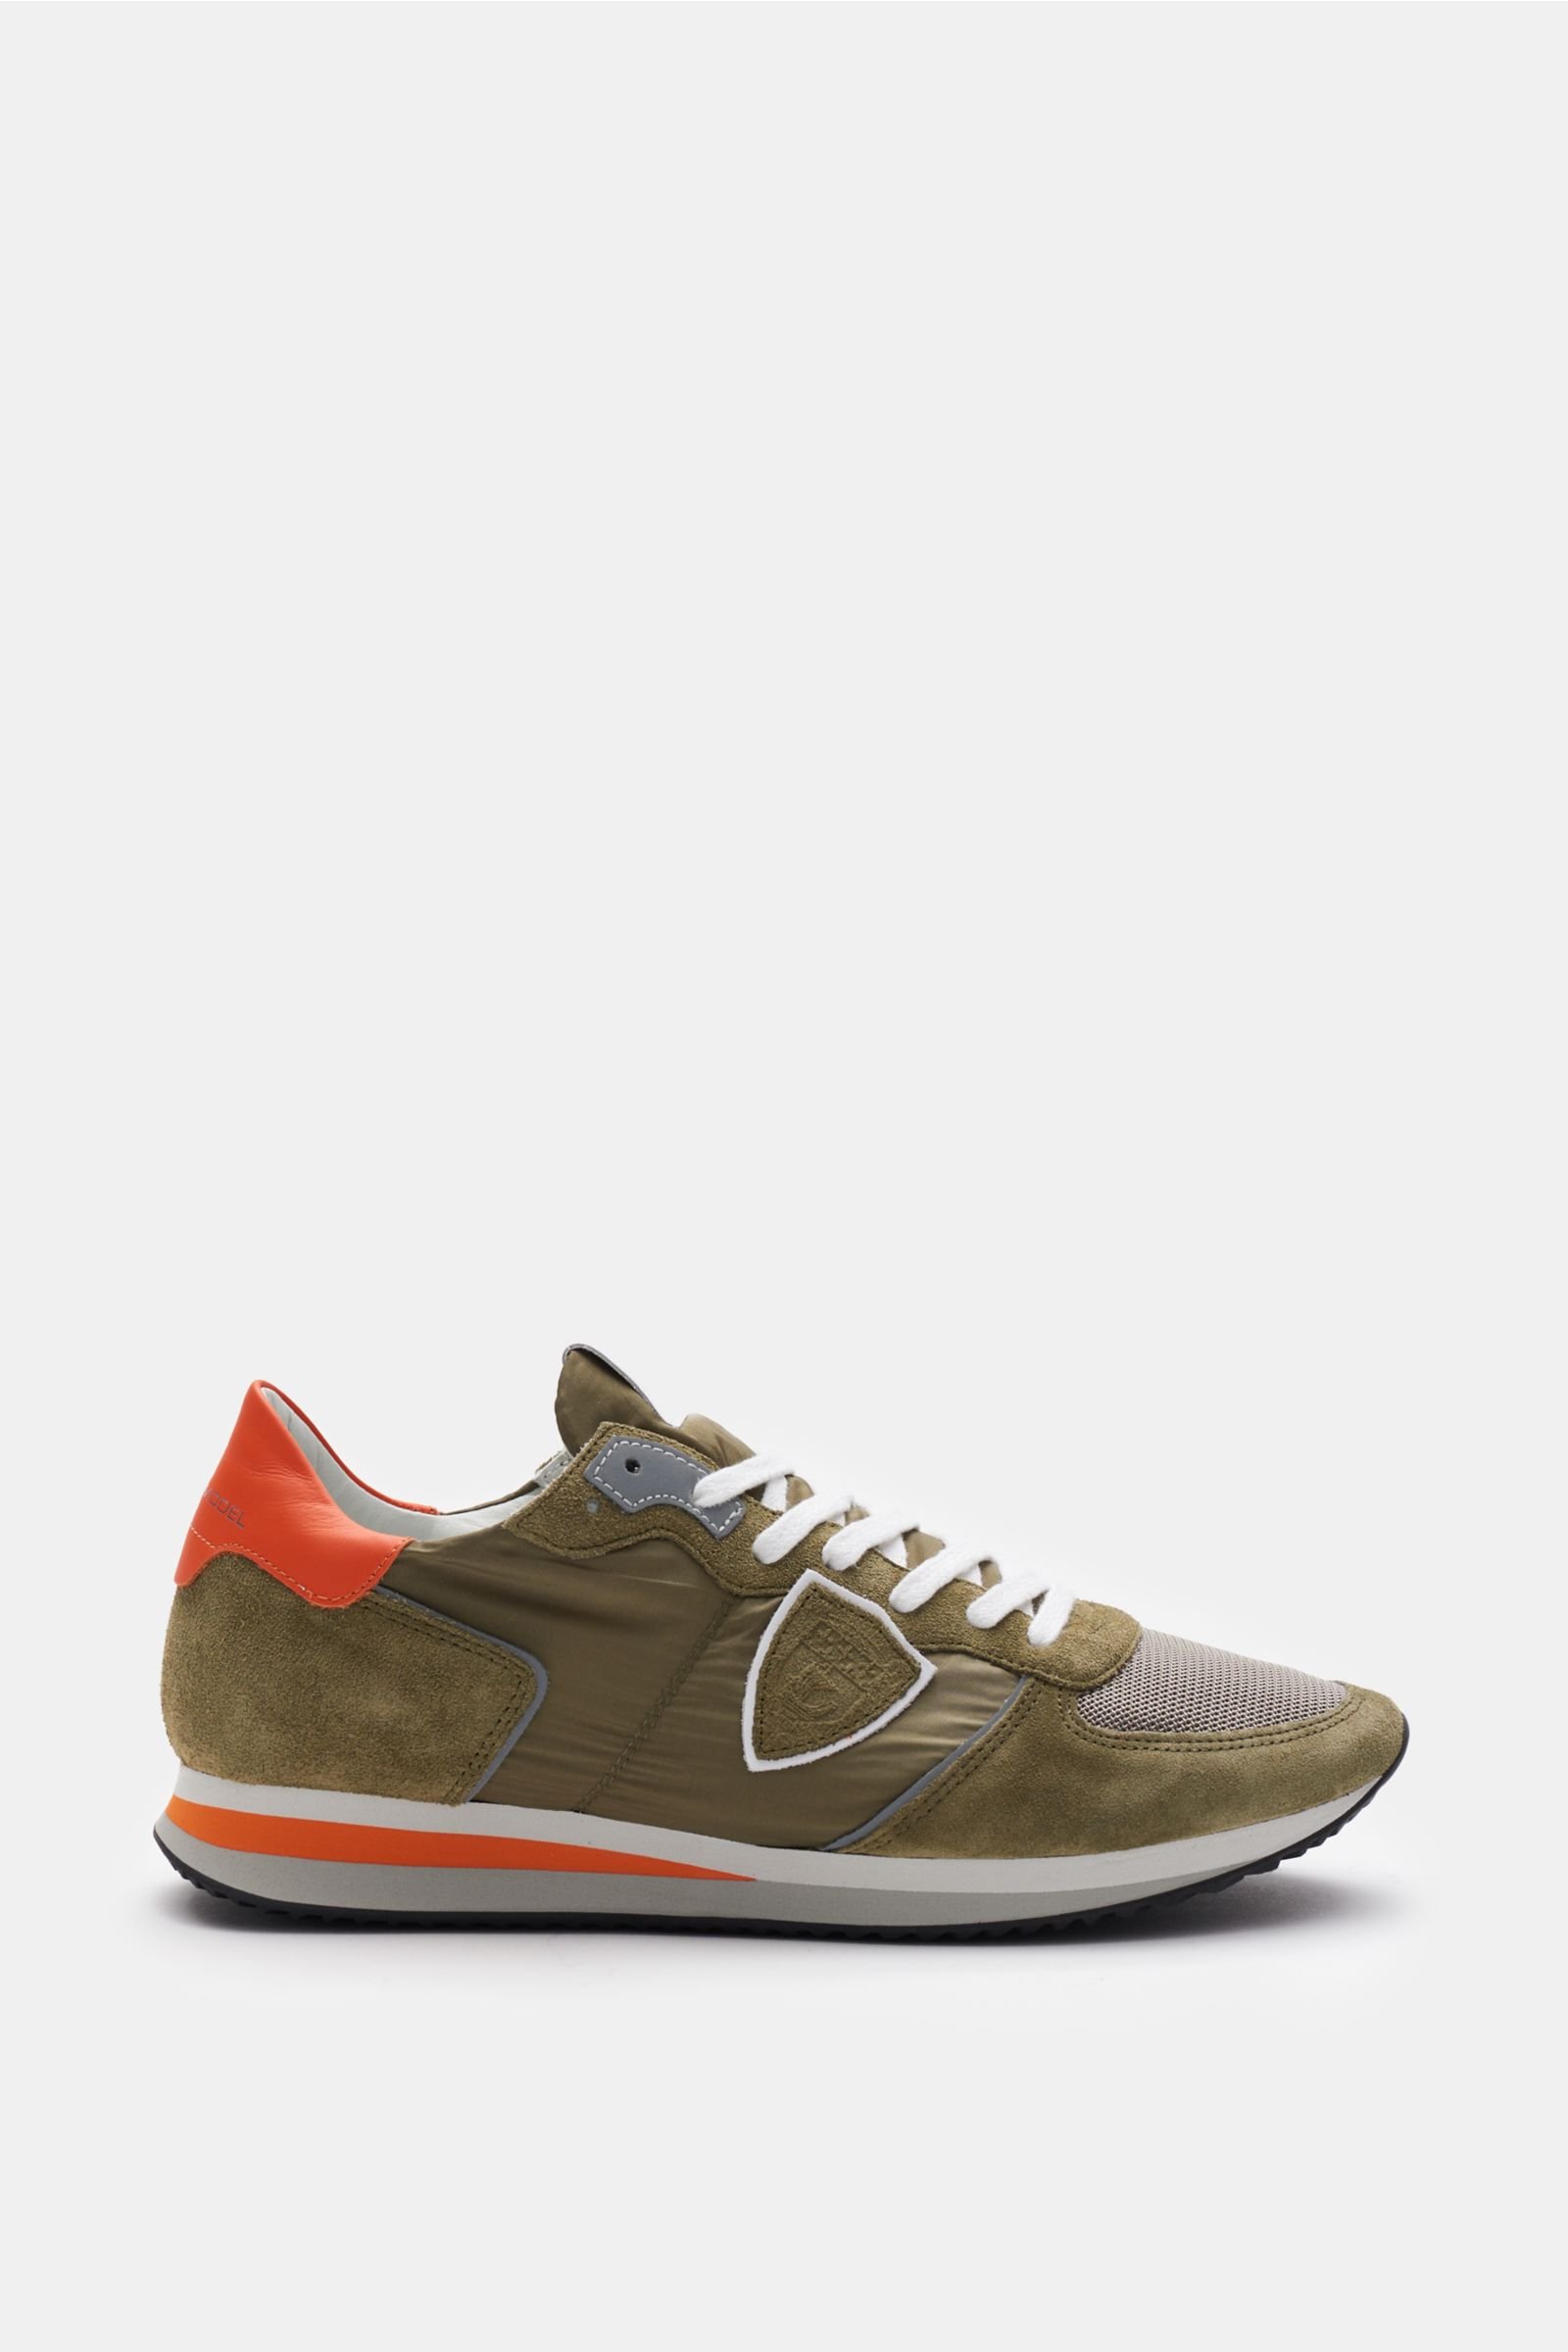 PHILIPPE MODEL sneakers 'Trpx Mondial' olive/orange | BRAUN Hamburg